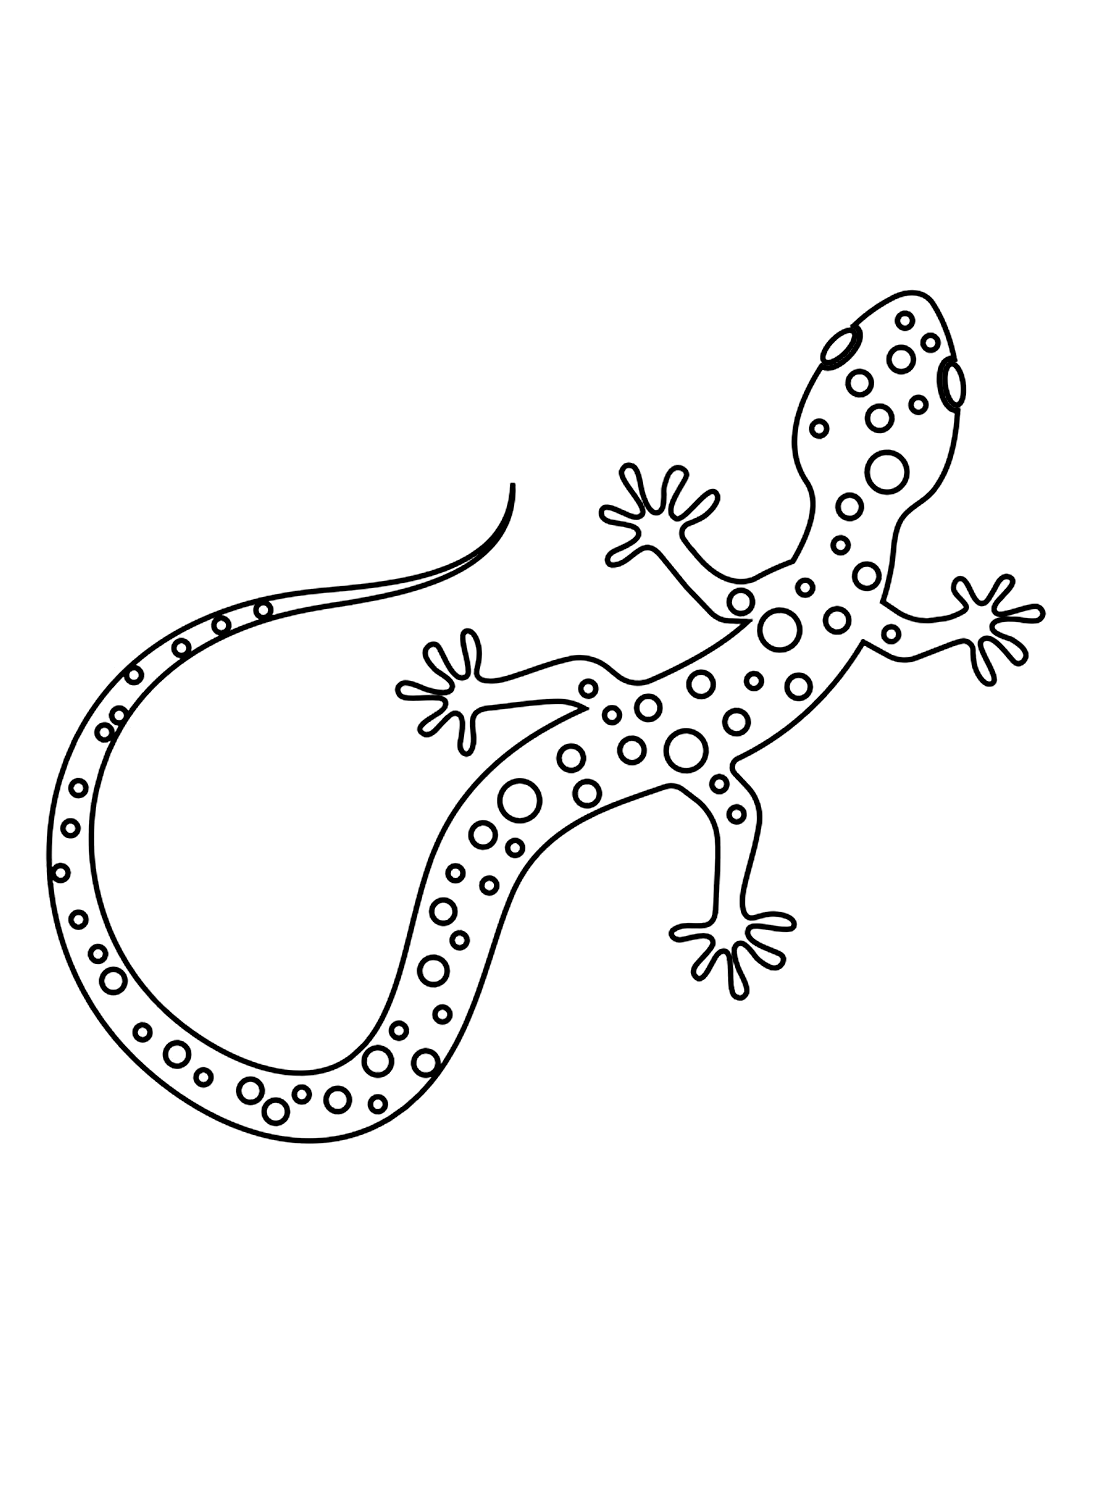 Lizard coloring page printable